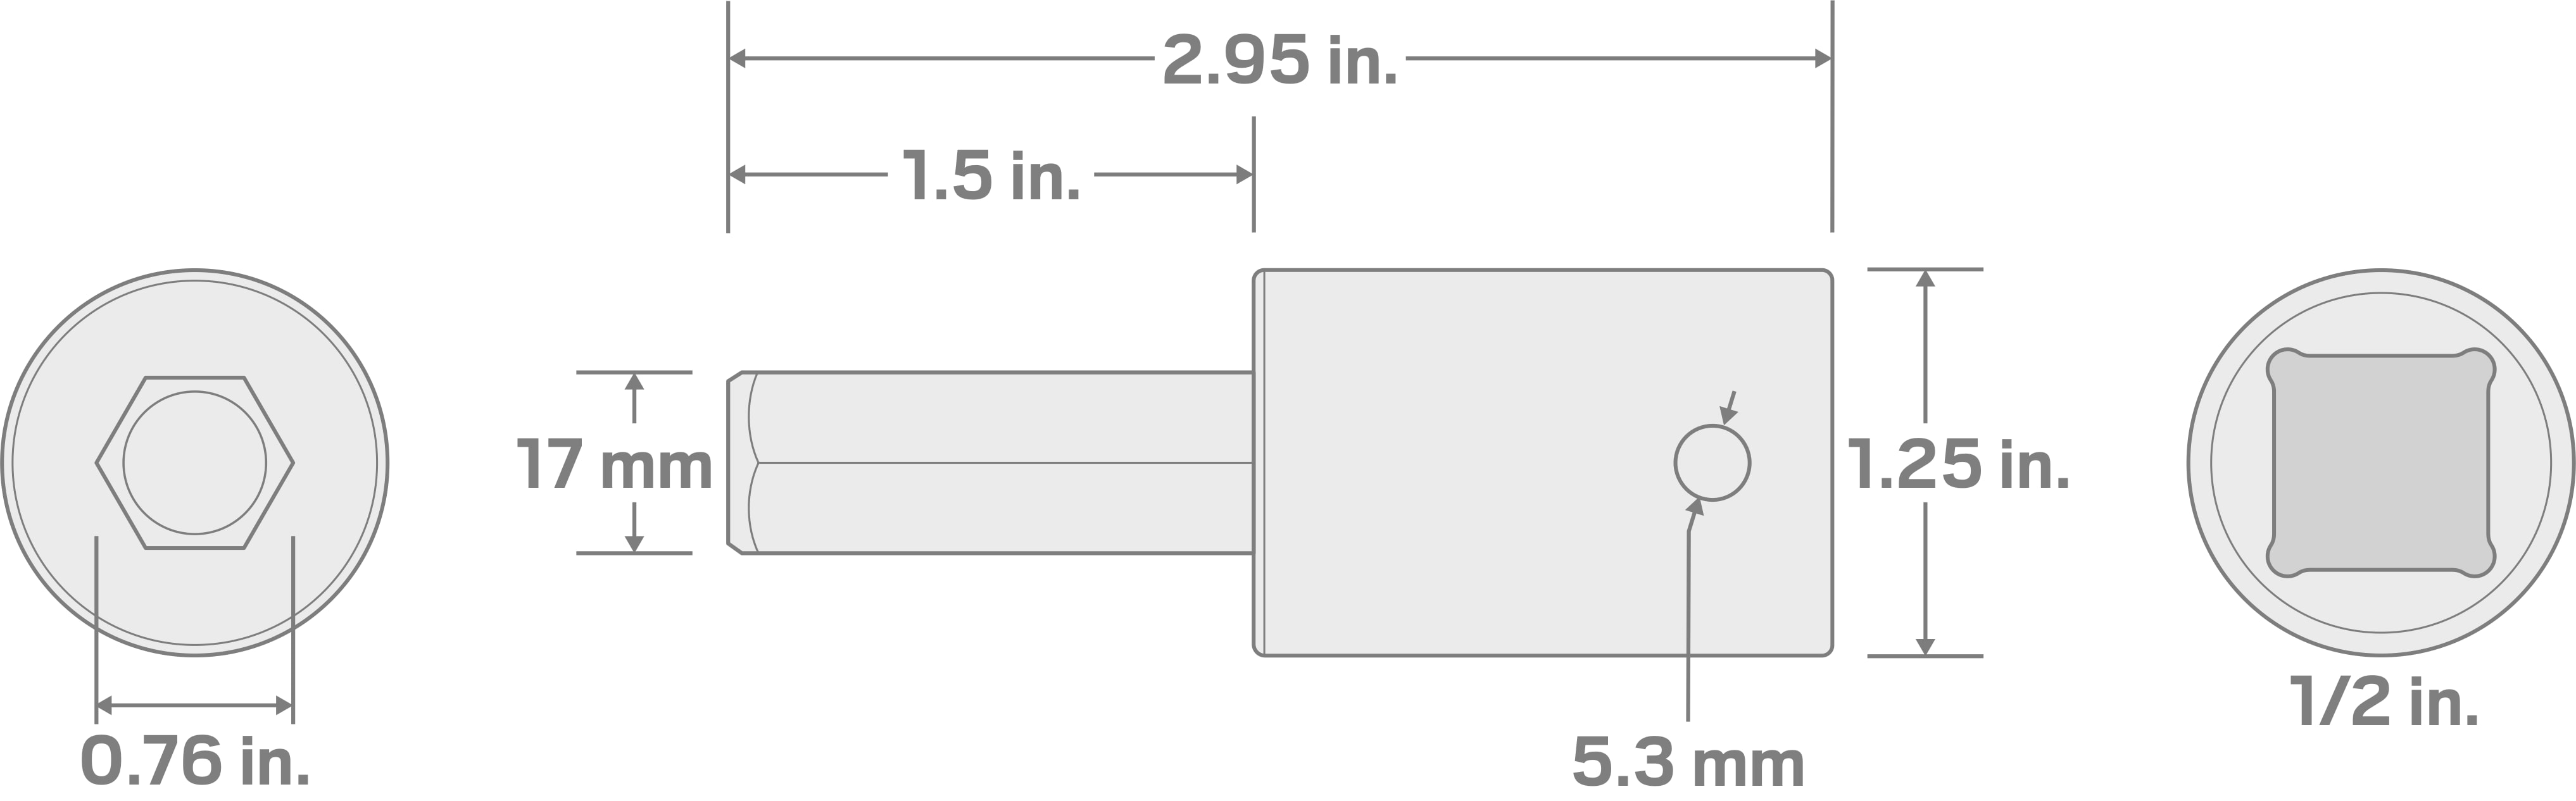 Specs for 1/2 Inch Drive x 17 mm Hex Impact Bit Socket